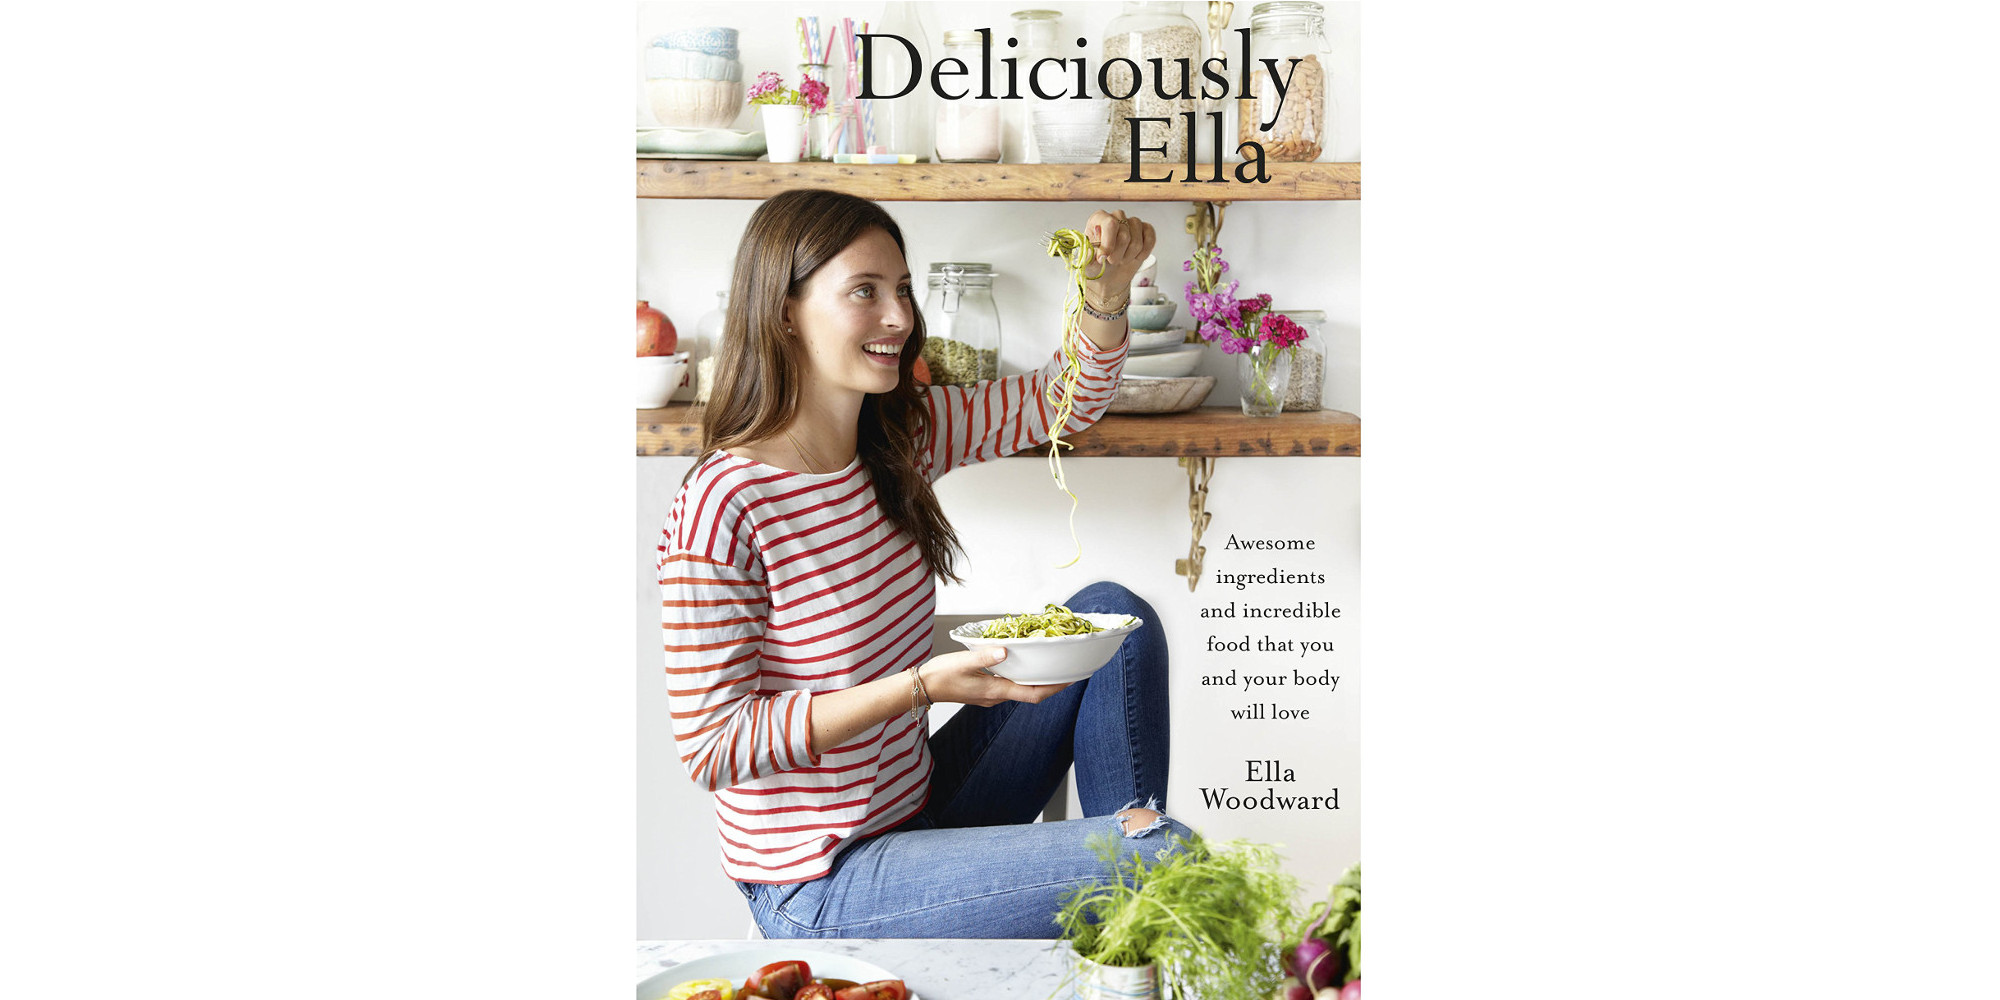 Deliciously Ella by Ella Woodward